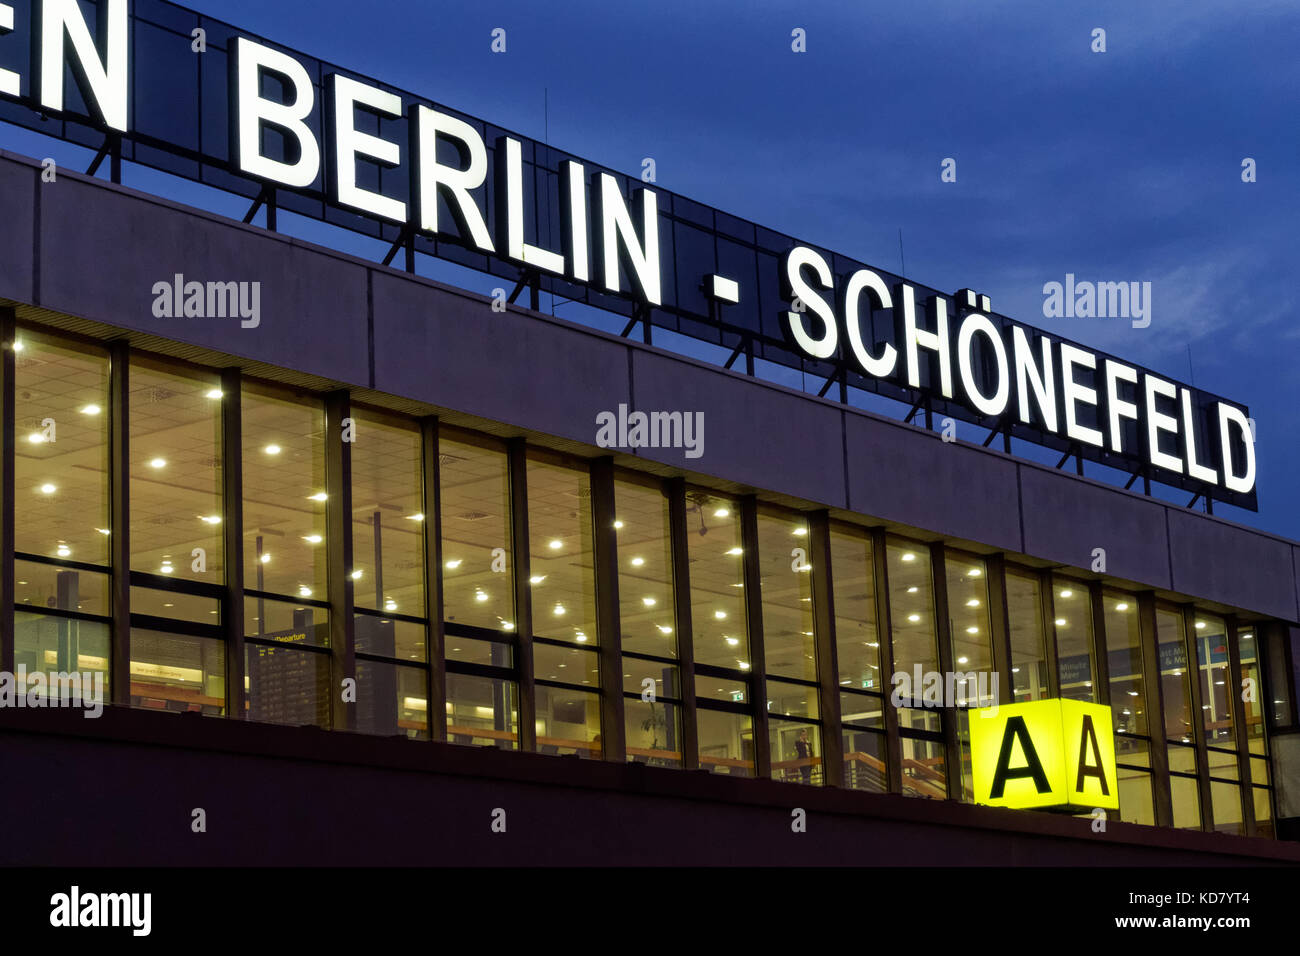 Berlin Schönefeld Airport, Germany Stock Photo